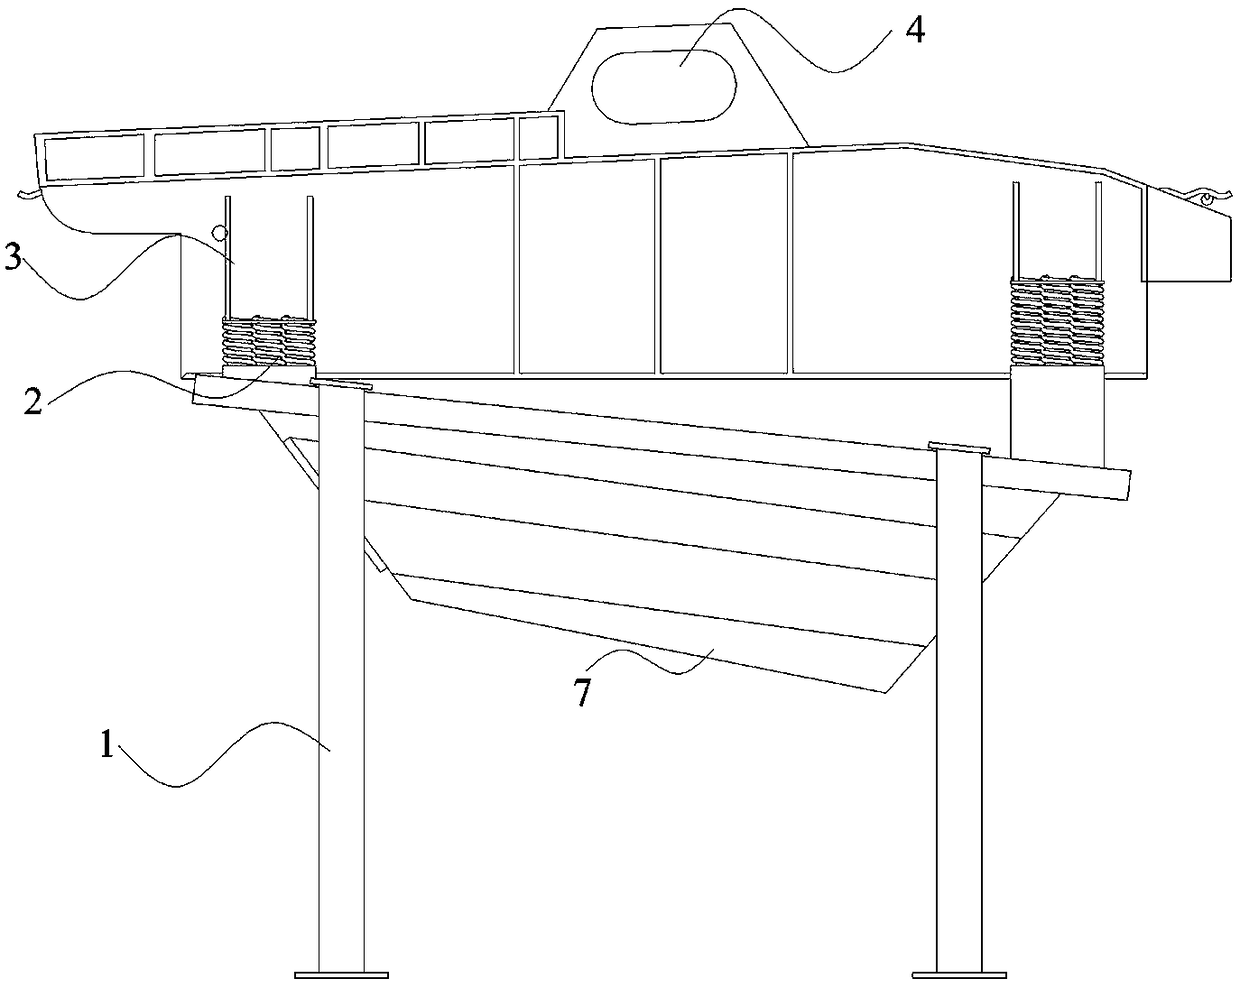 Horizontal vibration screen of steel slag and triple screening method